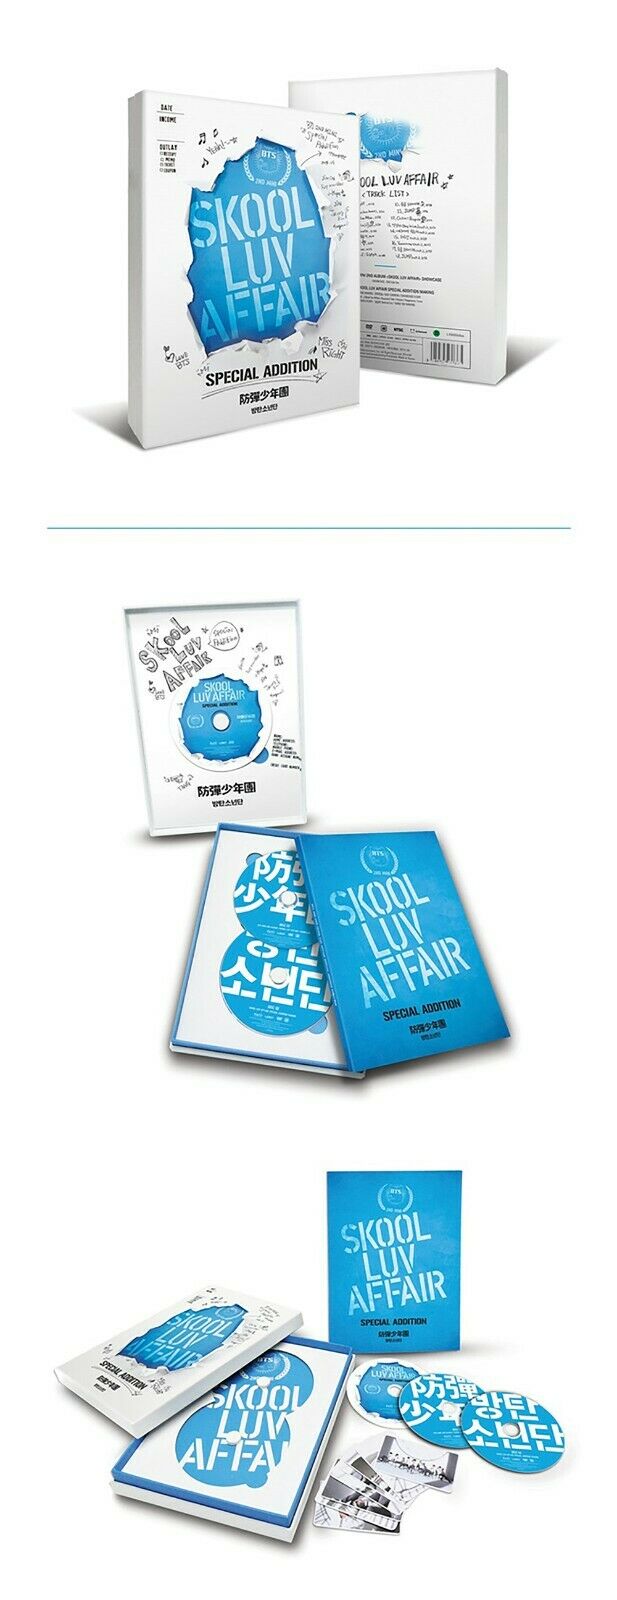 K-Pop CD BTS 'Skool Luv Affair (Special Addition)'